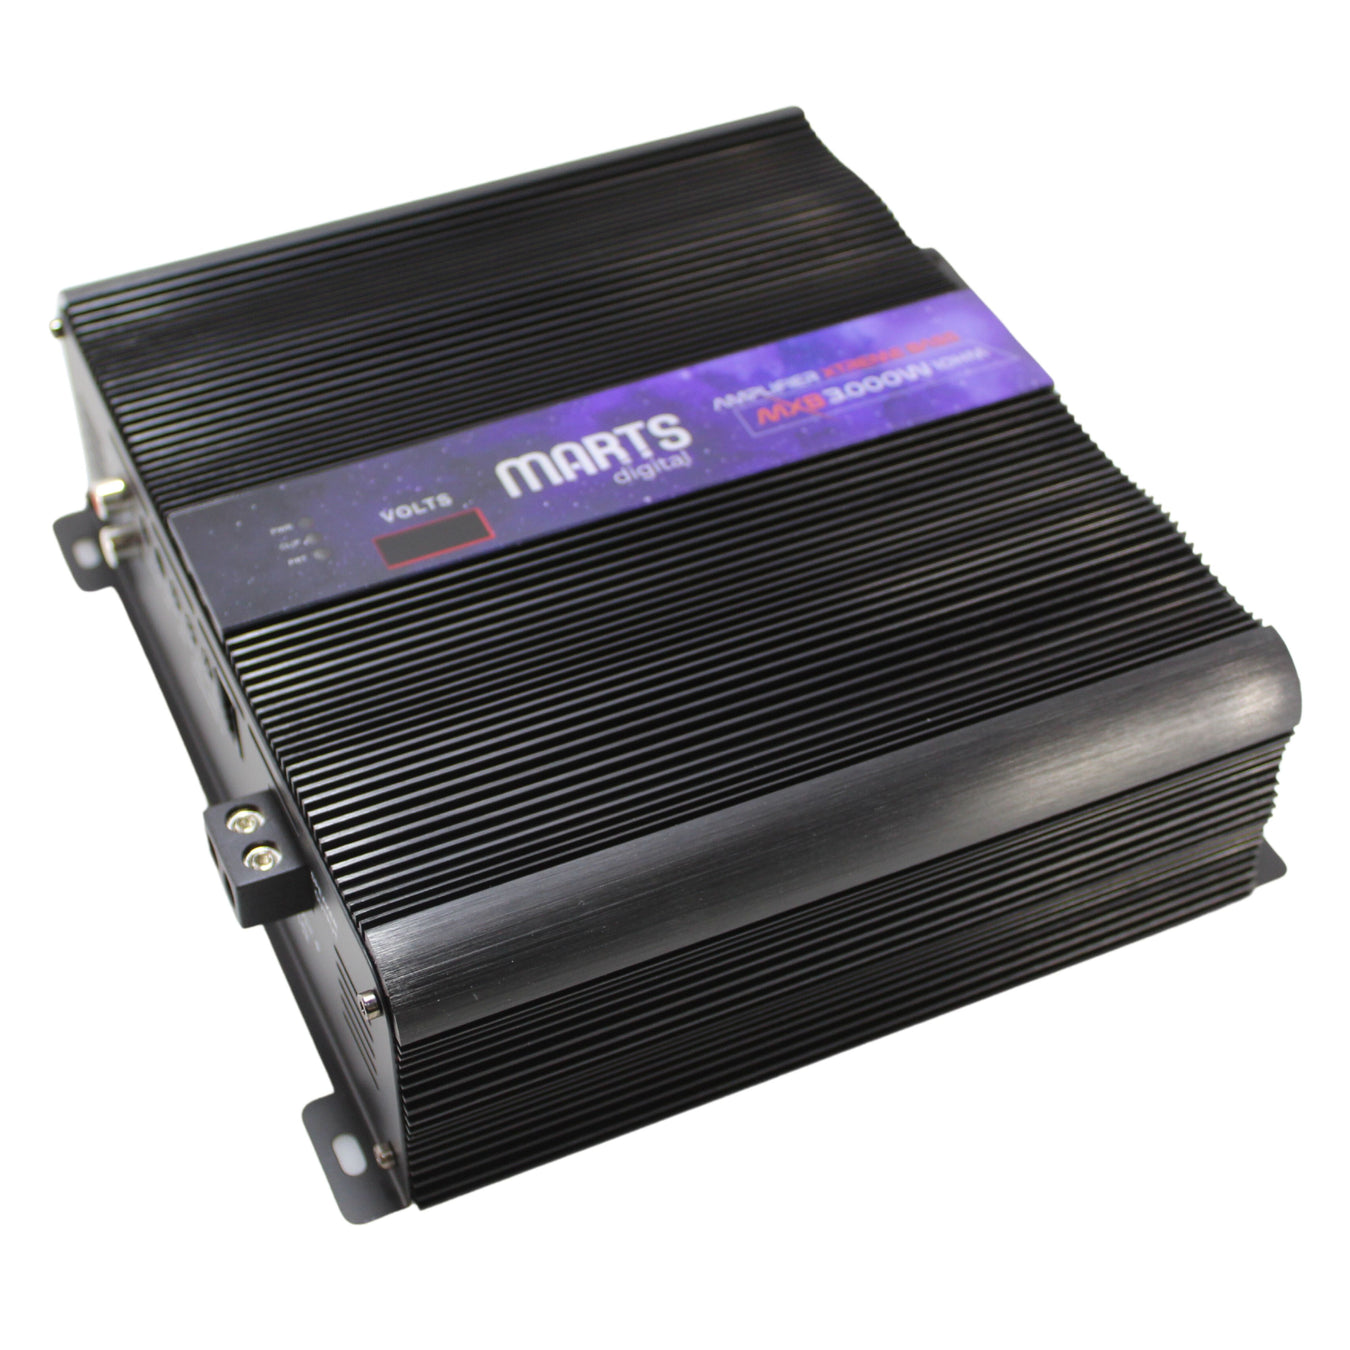 Marts Digital MXB Series Amplifiers